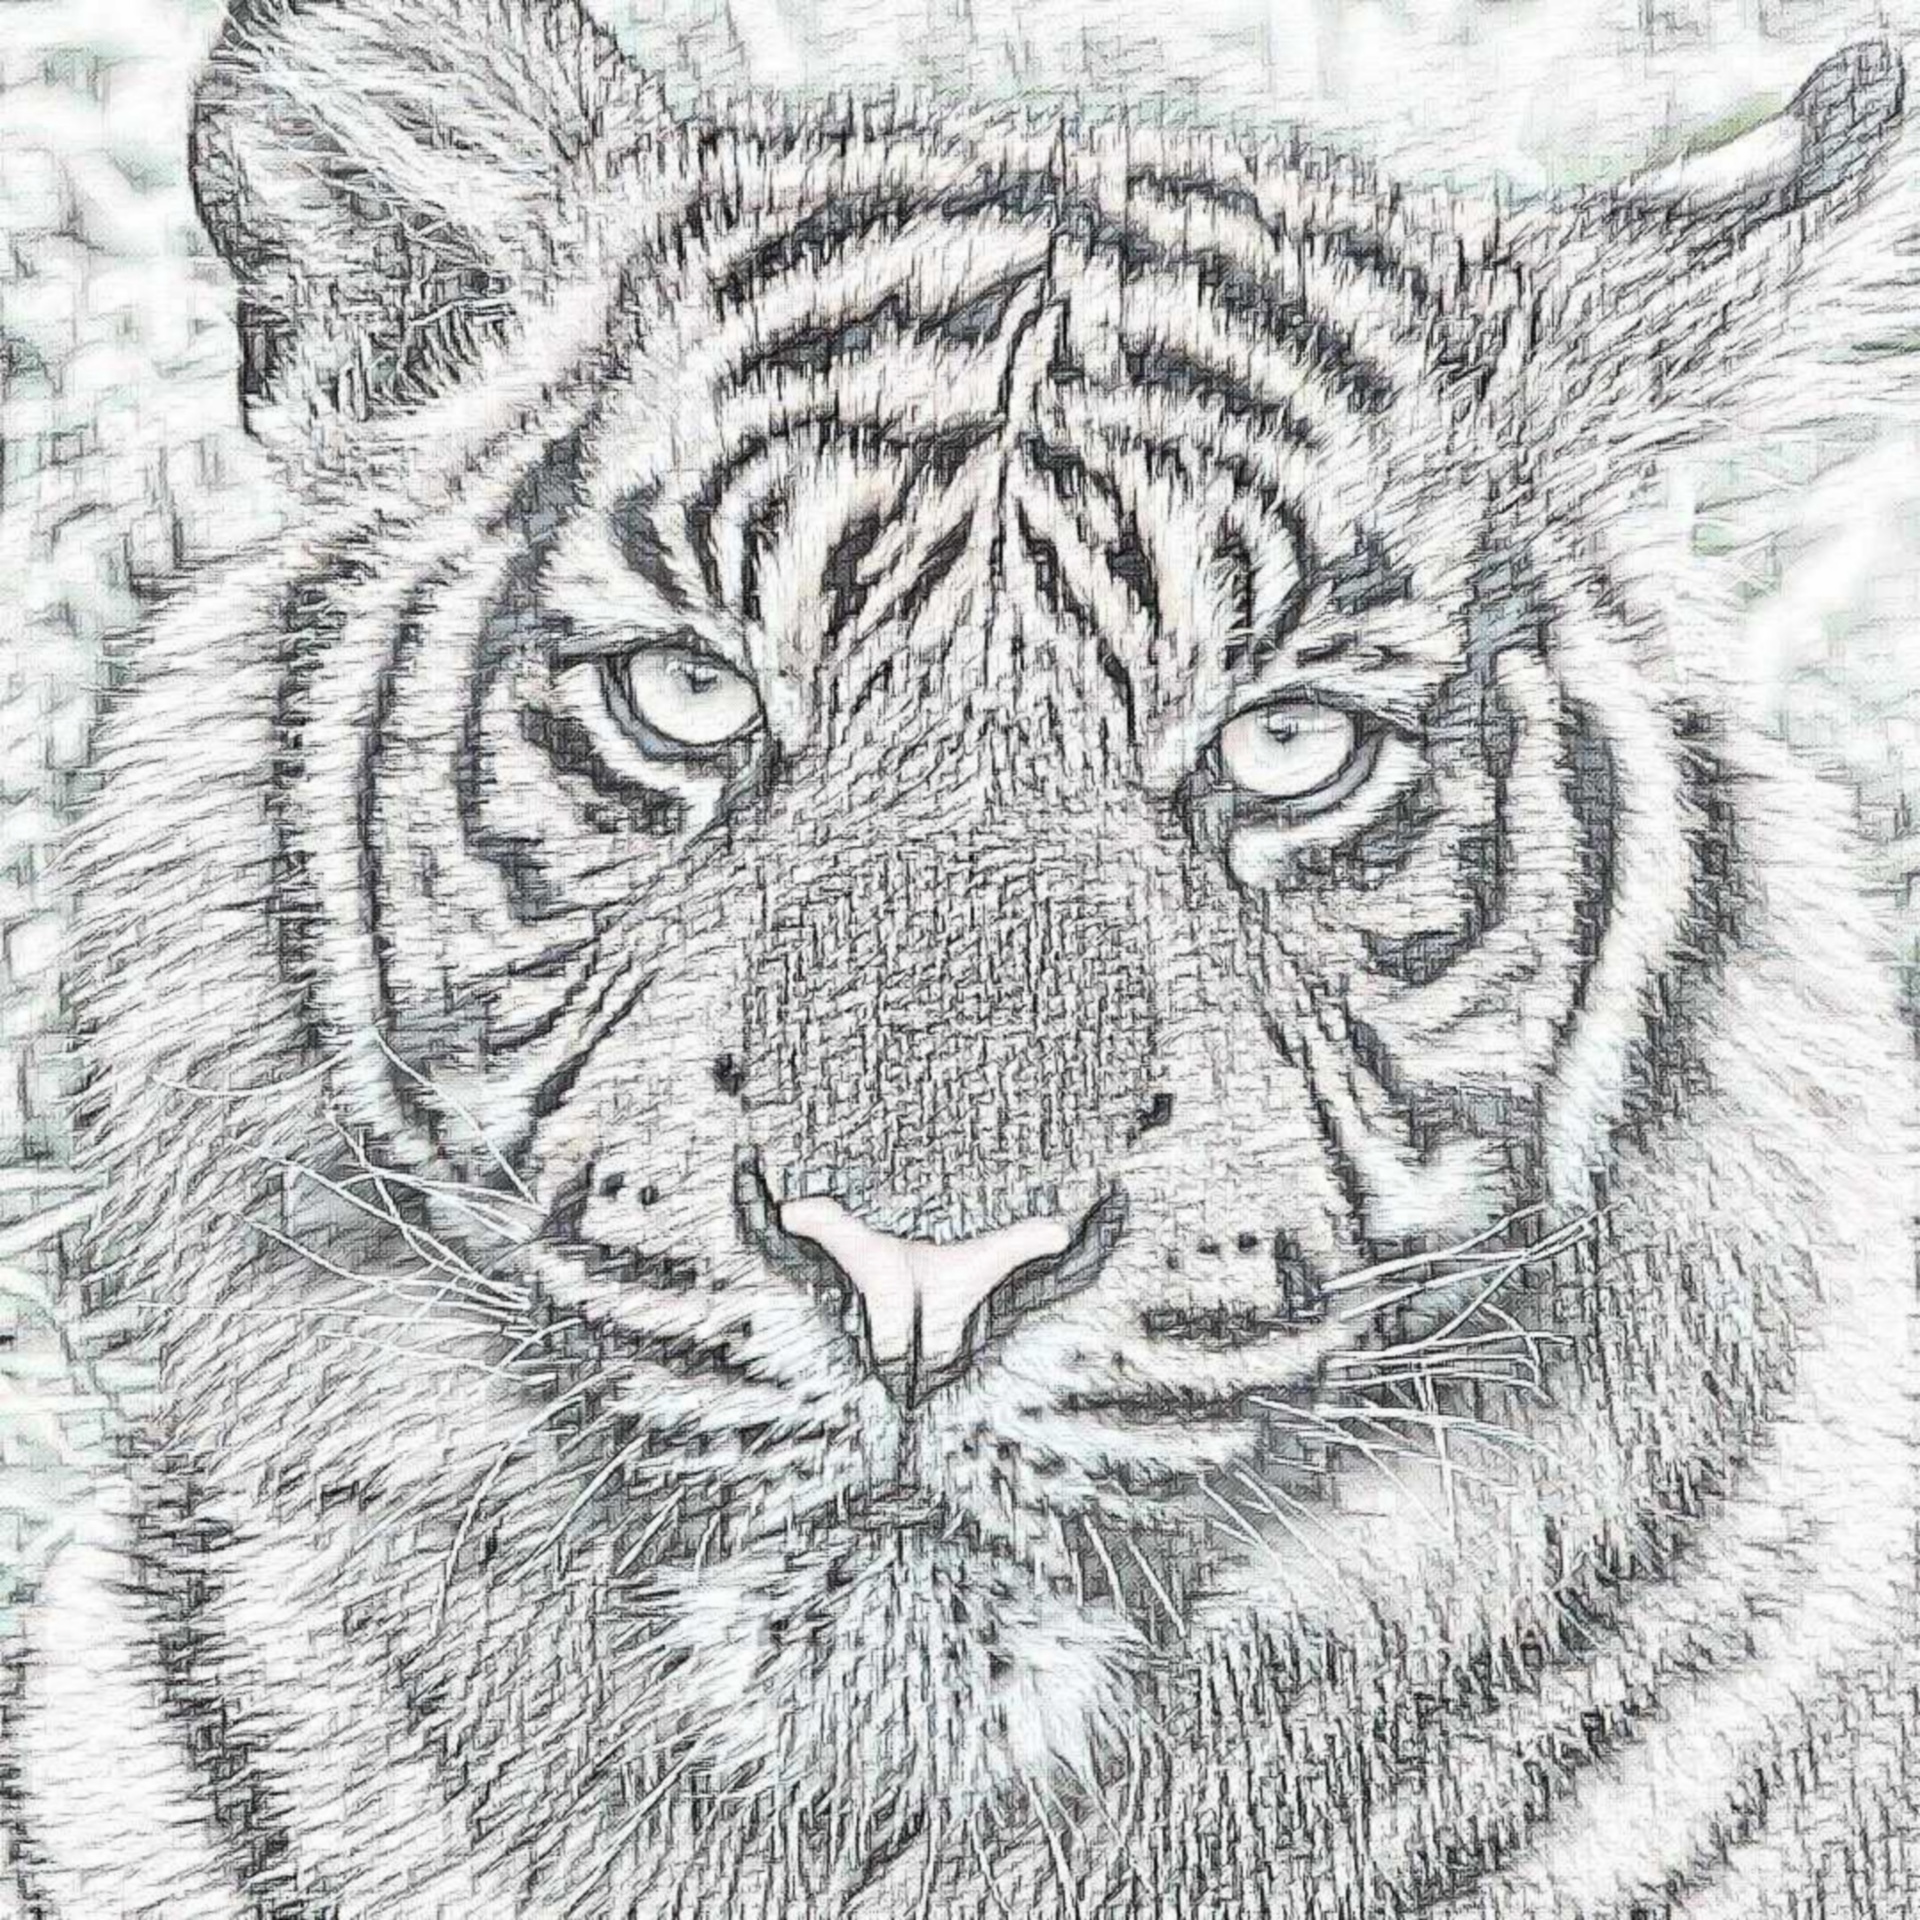 White Tiger Pencil Drawing